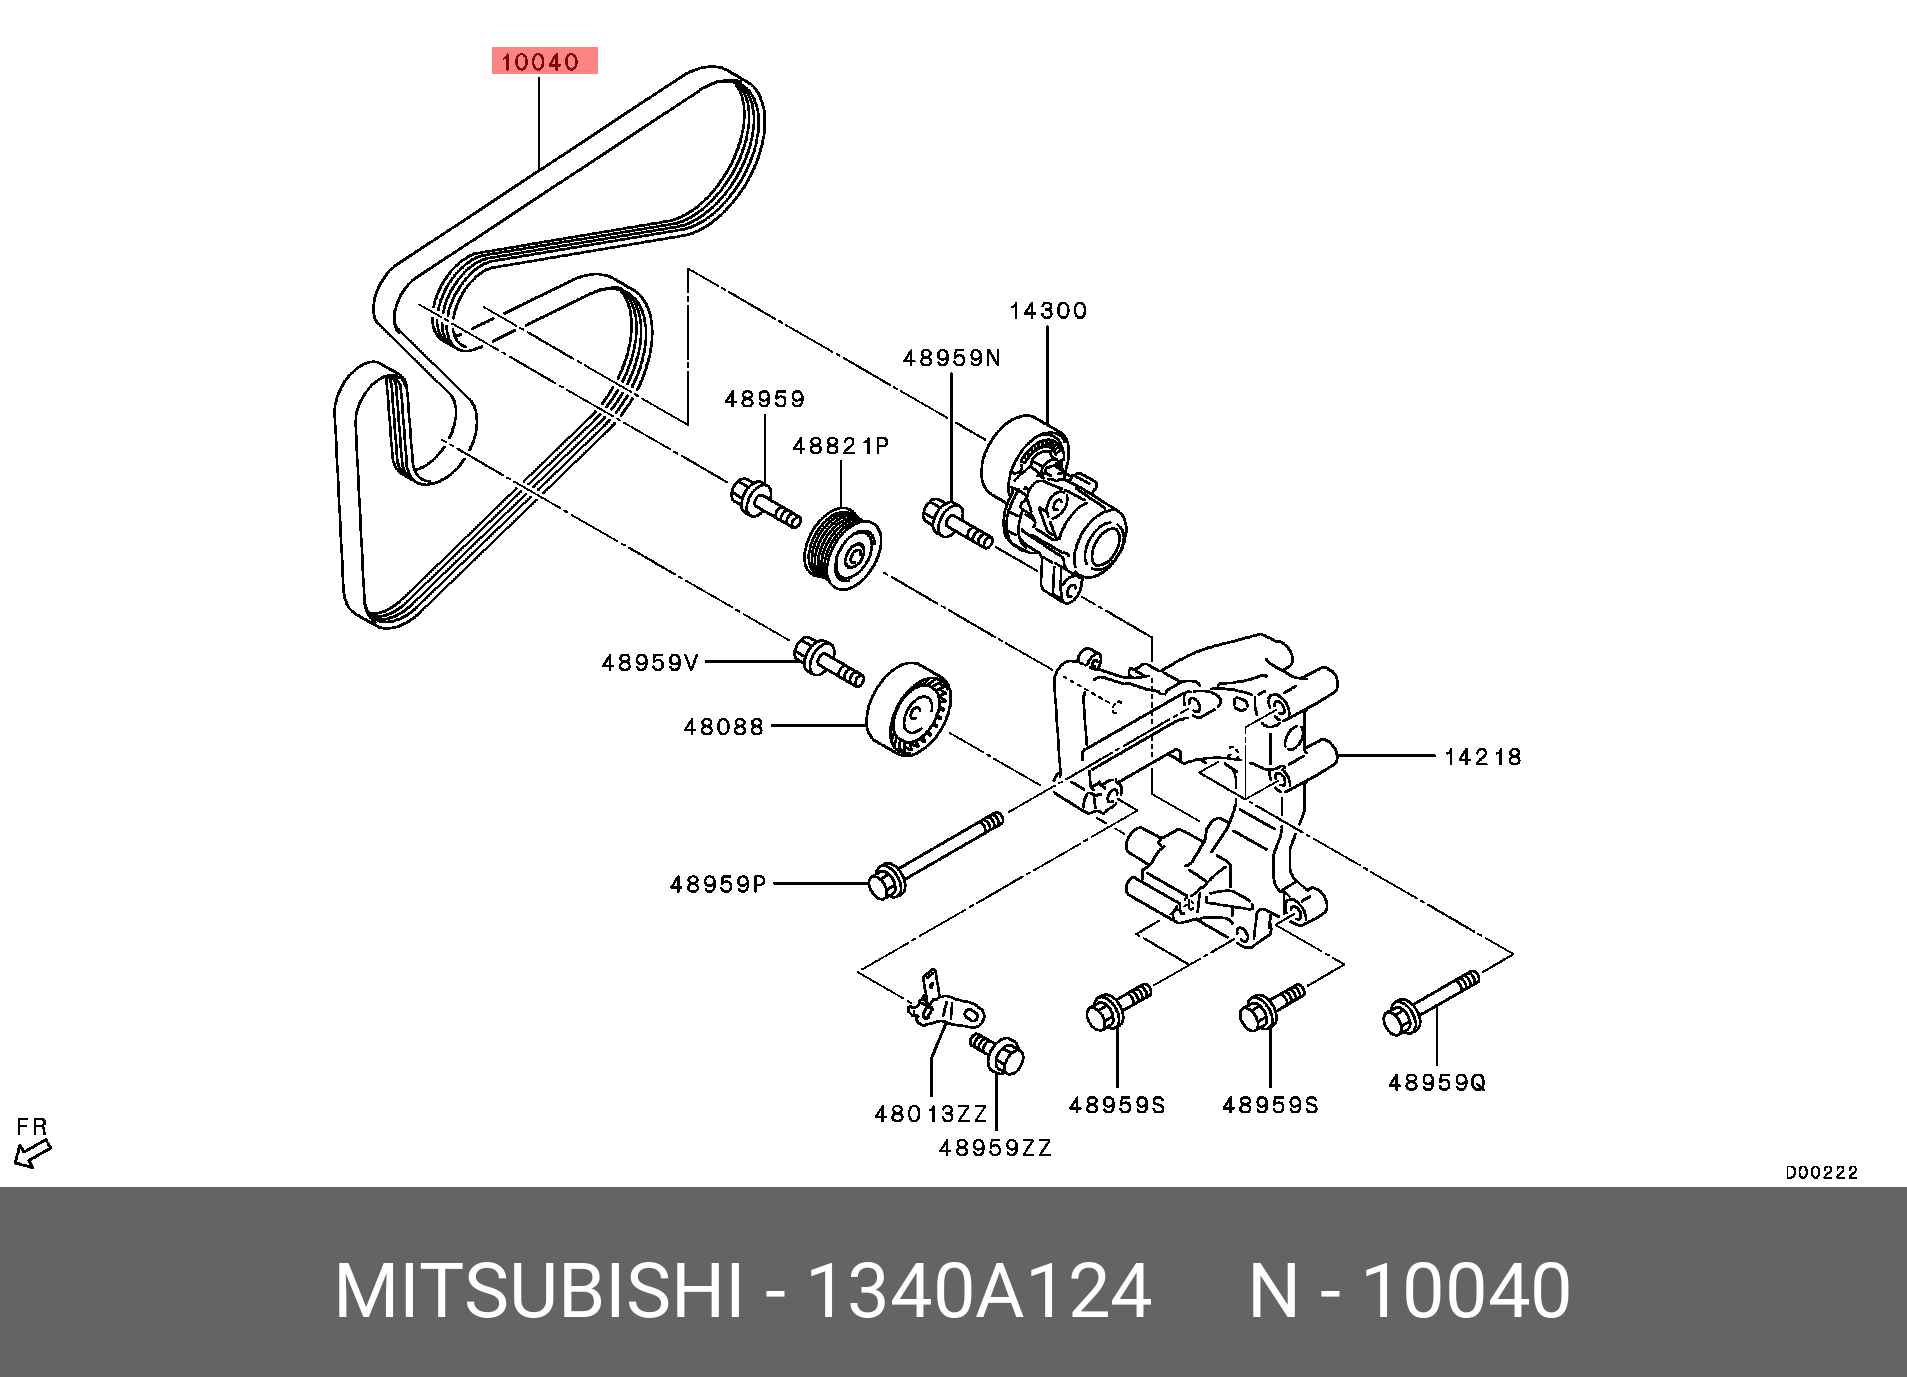 Ремень привода генератора и прочих - Mitsubishi 1340A124